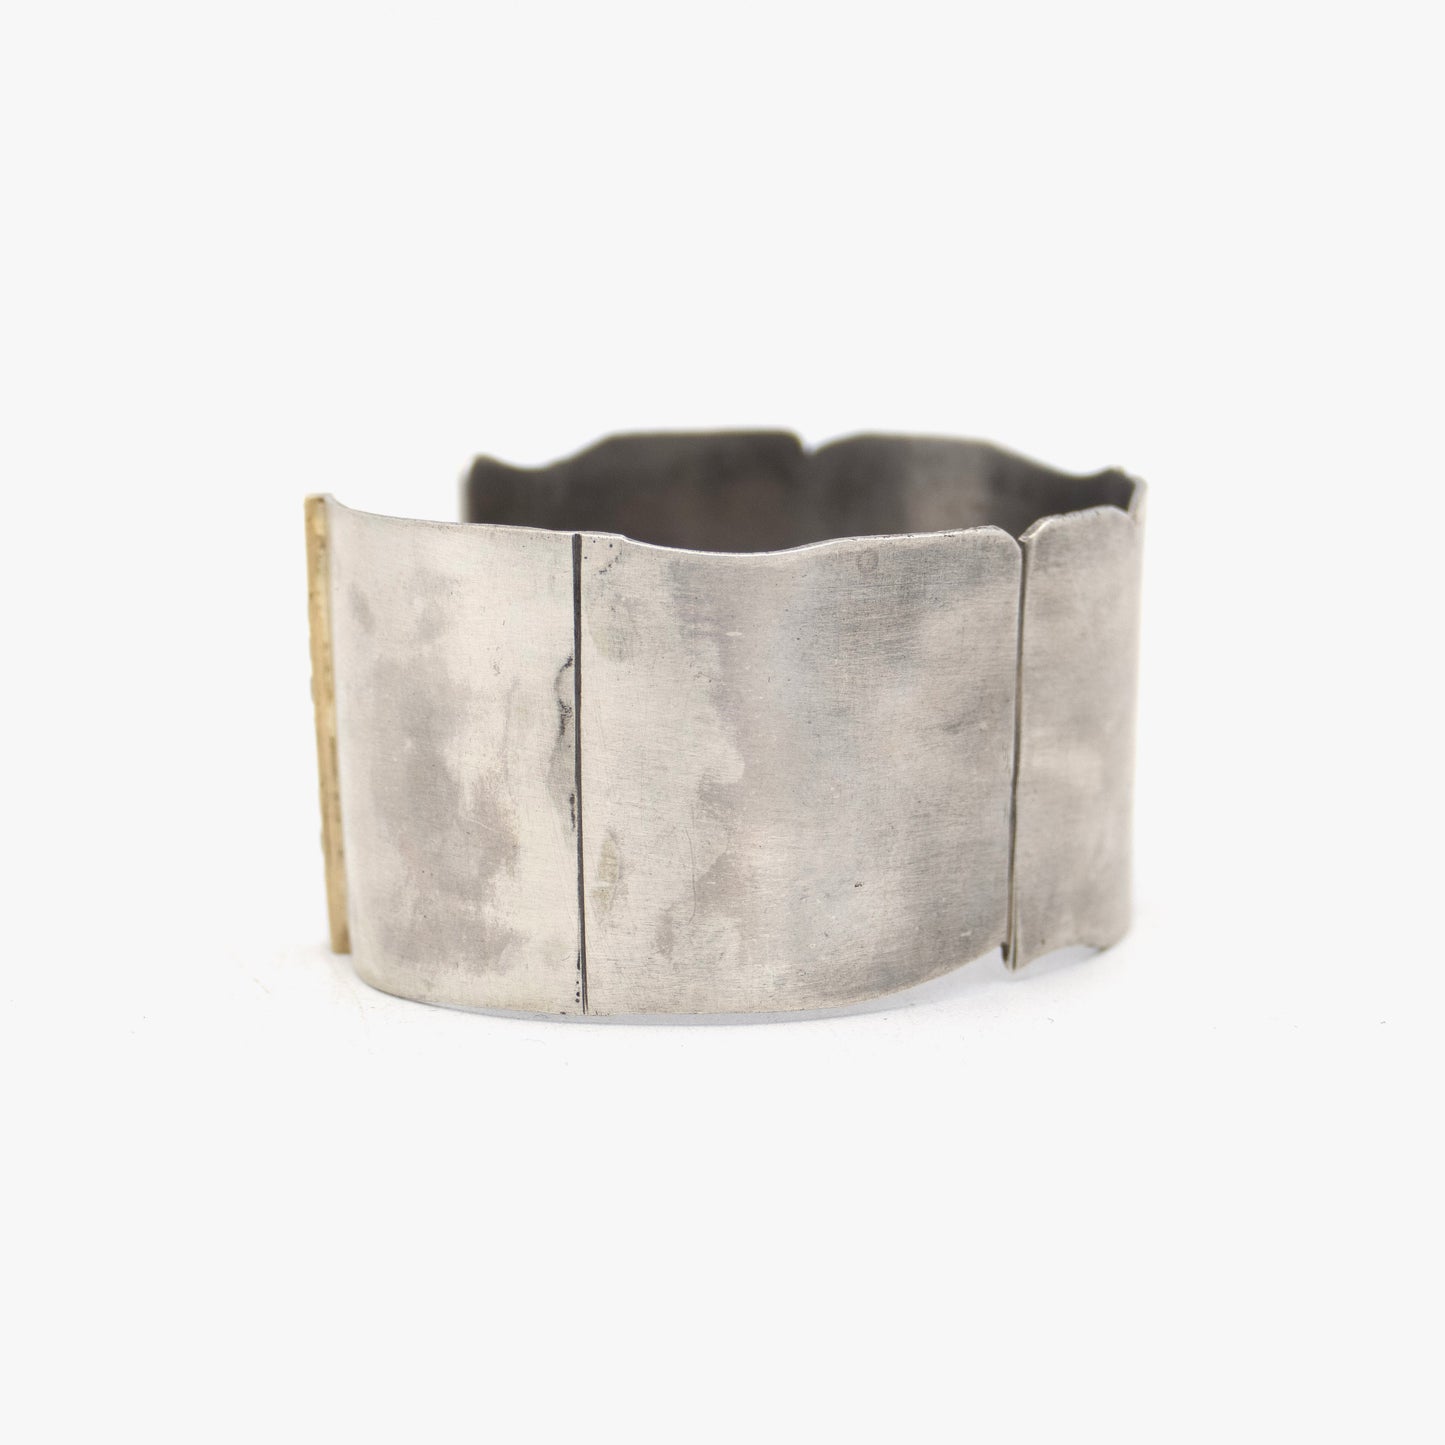 Irit Design Asymmetrical 10K Gold & Sterling Silver Cuff